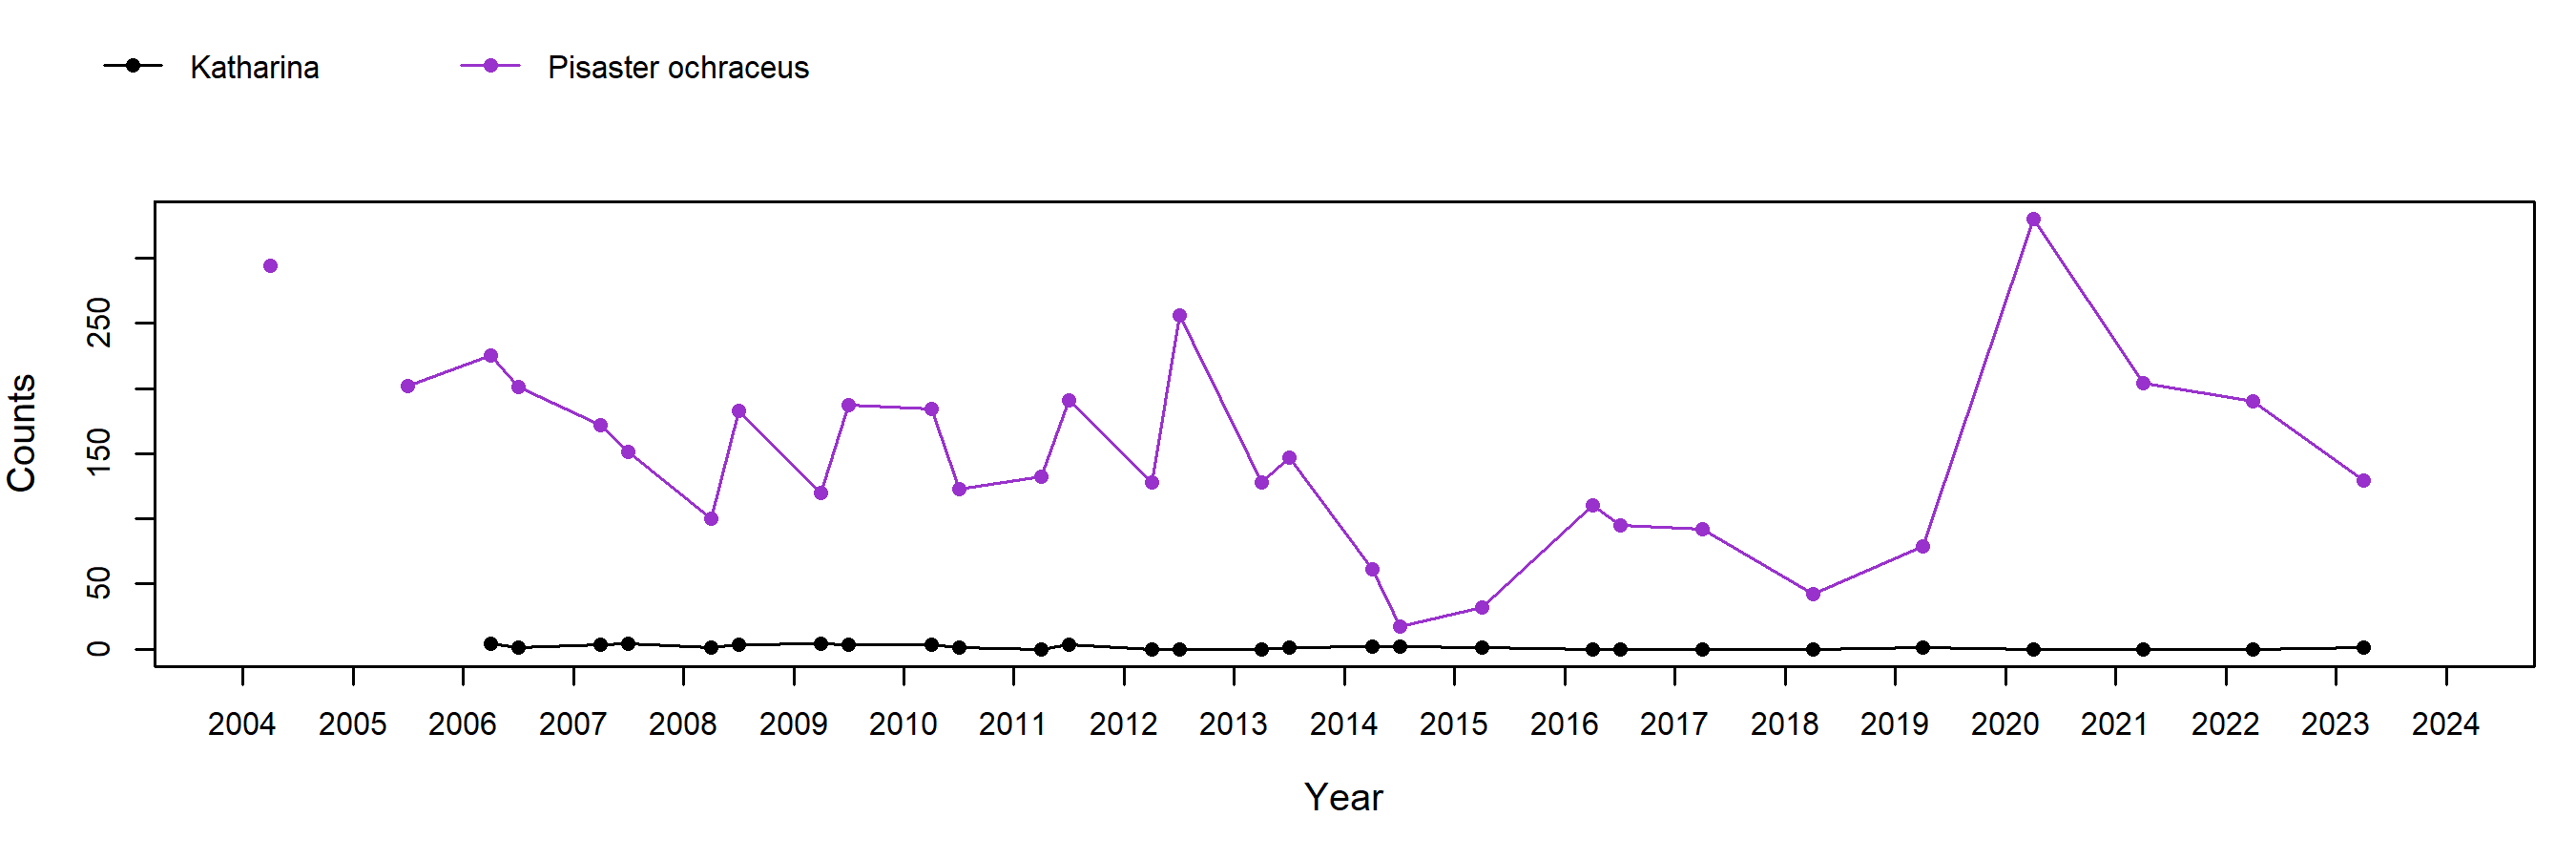 Damnation Creek Pisaster trend plot